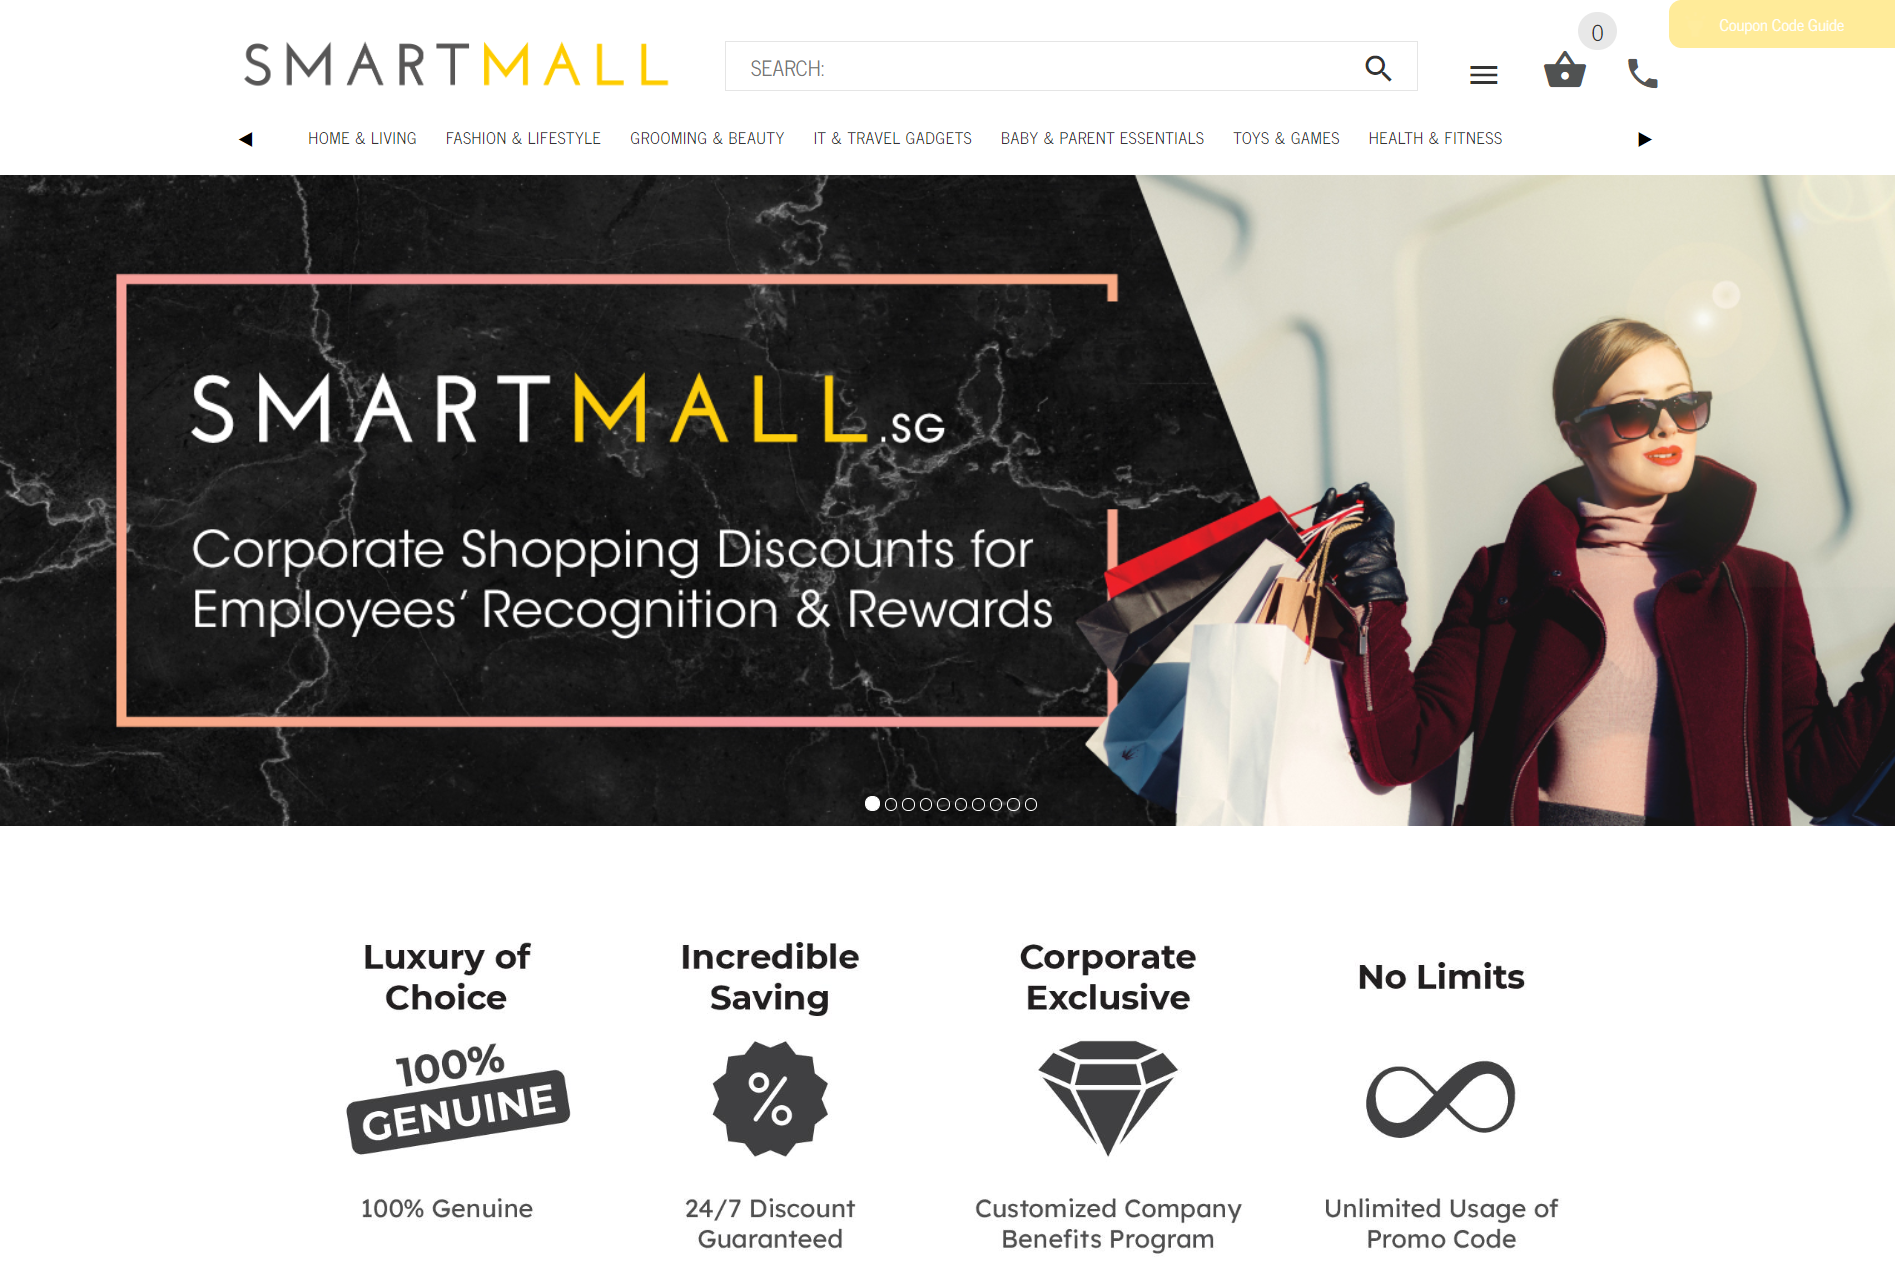 Smartmall - Corporate Discounts & Employee Benefits Program in Singapore